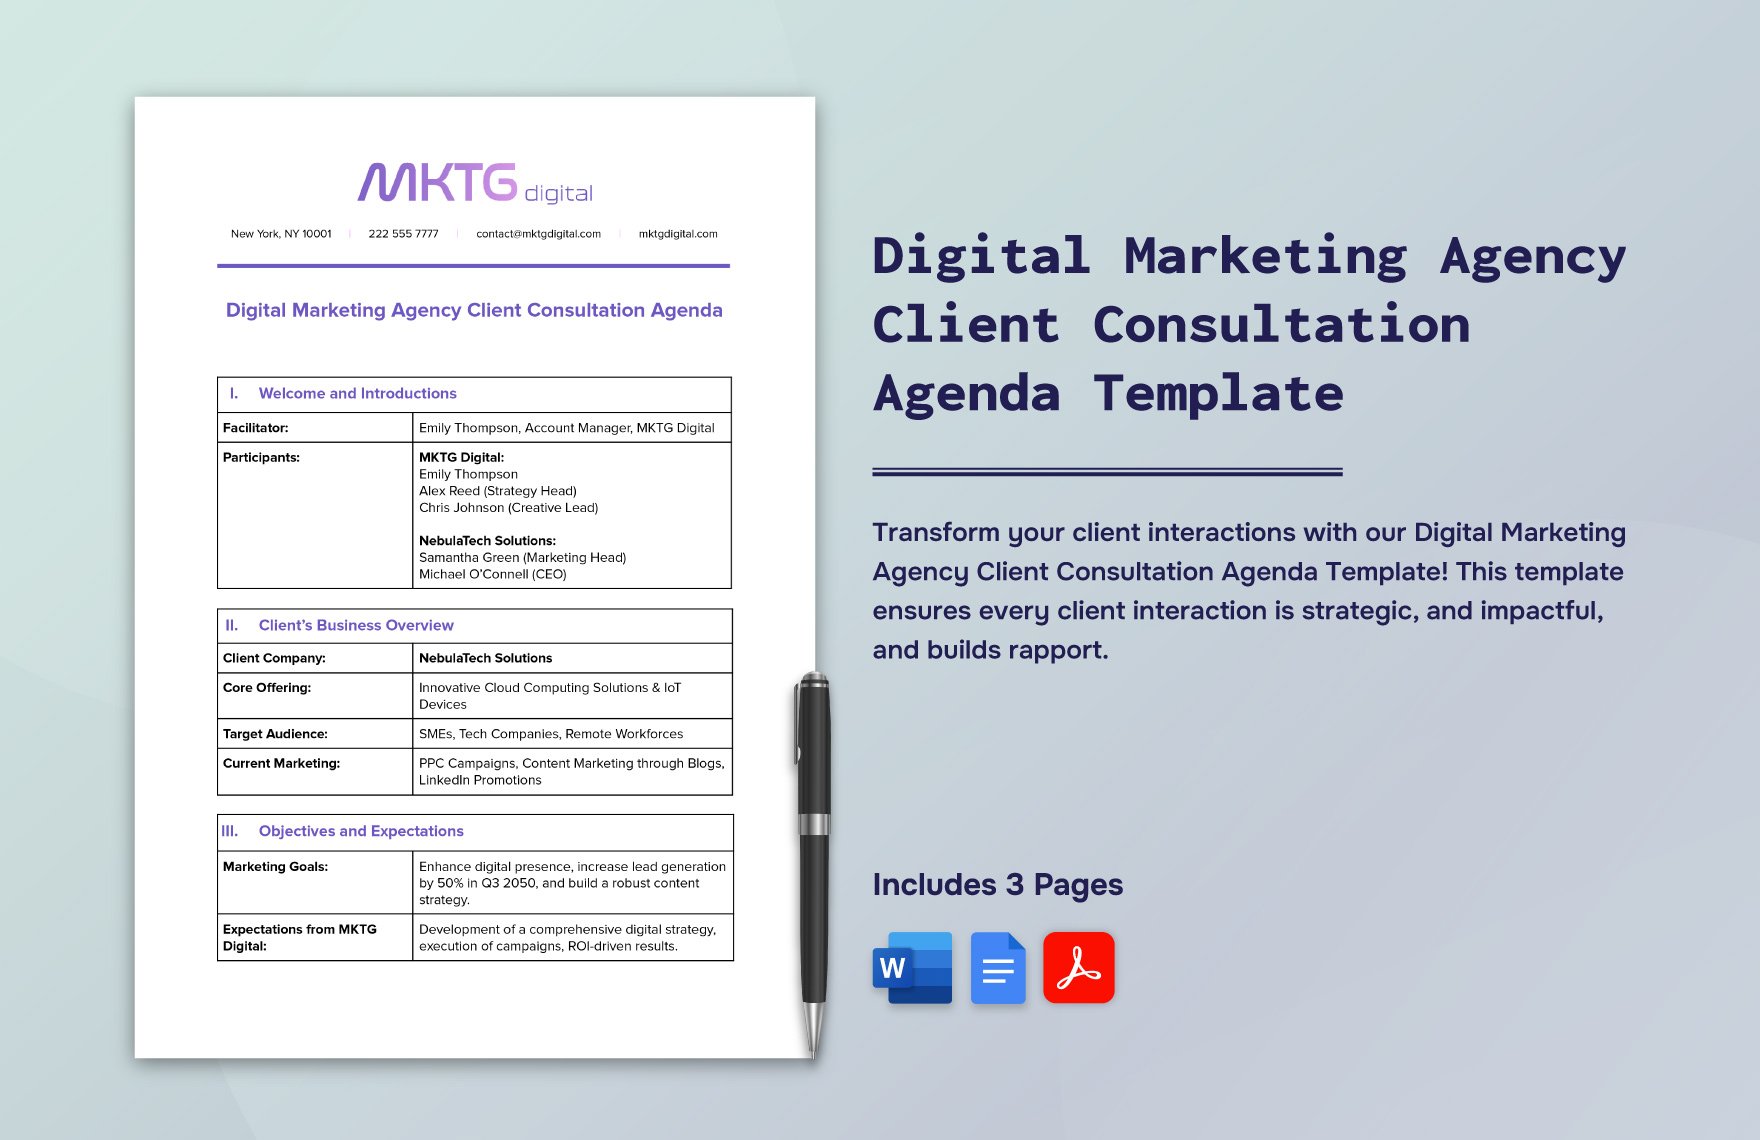 Digital Marketing Agency Client Consultation Agenda Template